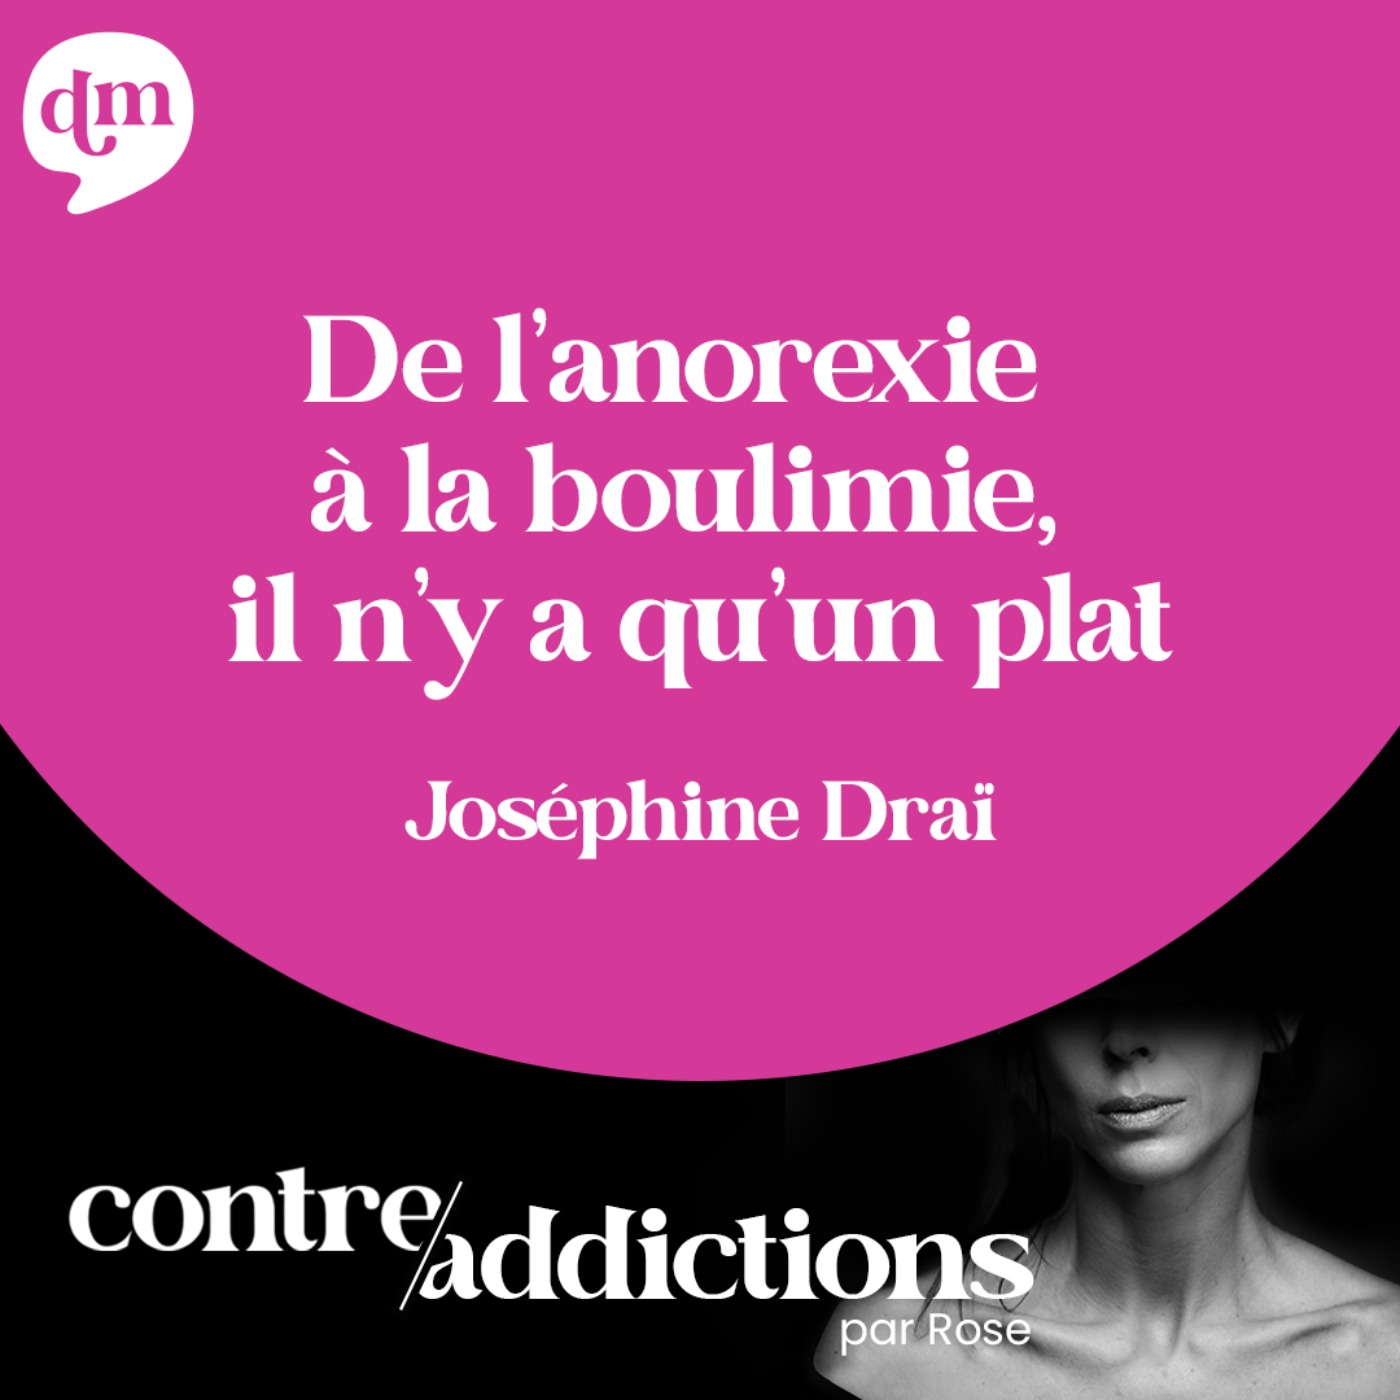 S2E16 - De l’anorexie à la boulimie, il n’y a pas qu’un plat - Josephine Draï